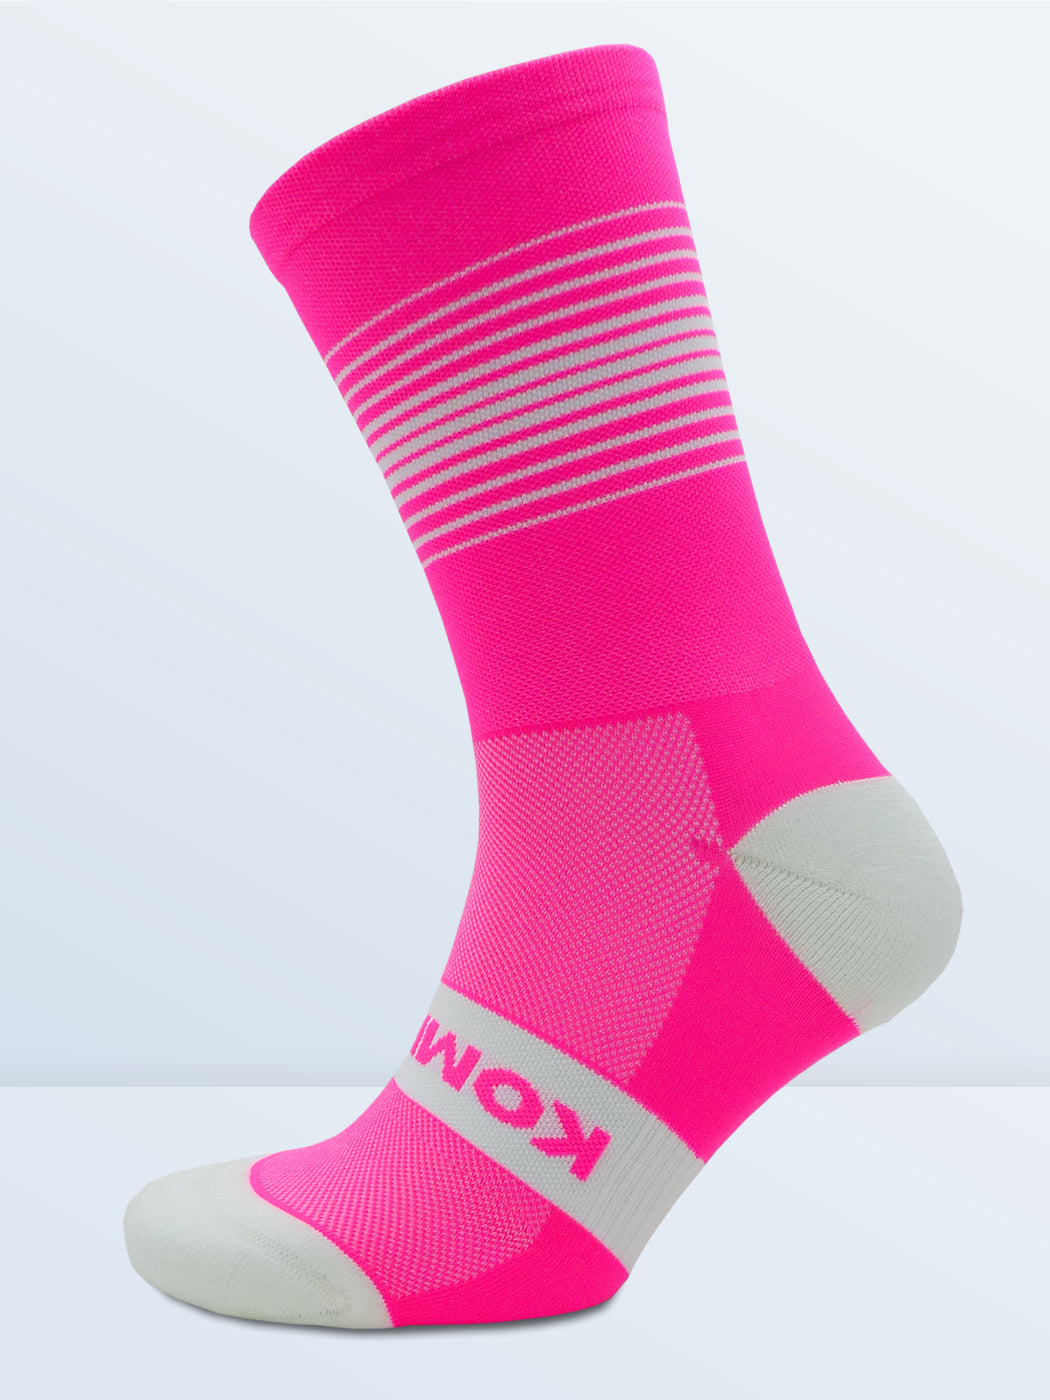 Swagger Socks - Fluro Pink